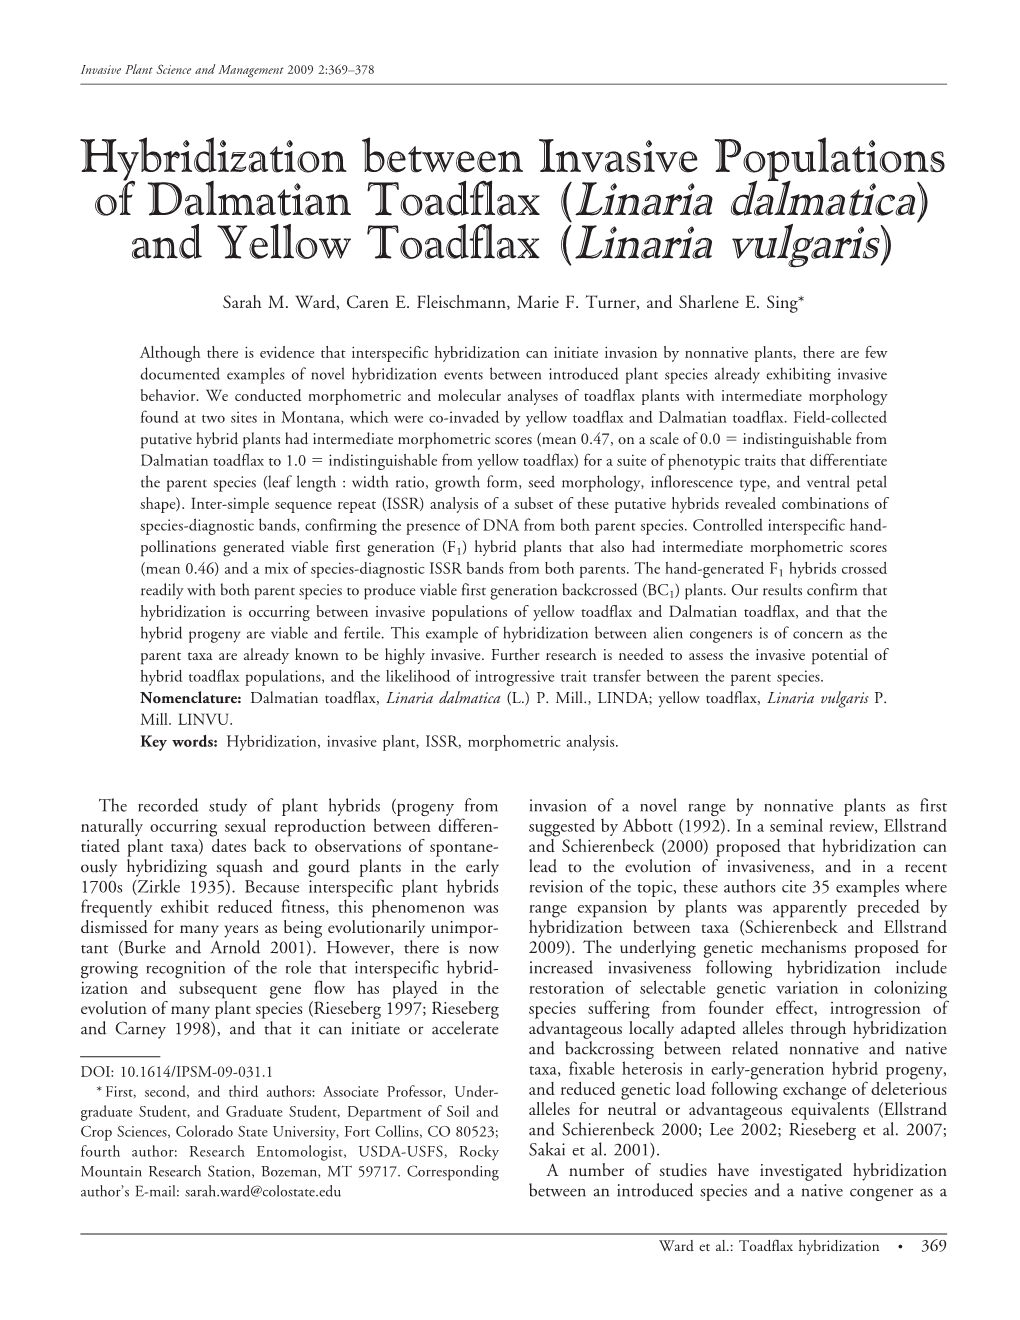 Hybridization Between Invasive Populations of Dalmatian Toadflax (Linaria Dalmatica) and Yellow Toadflax (Linaria Vulgaris)